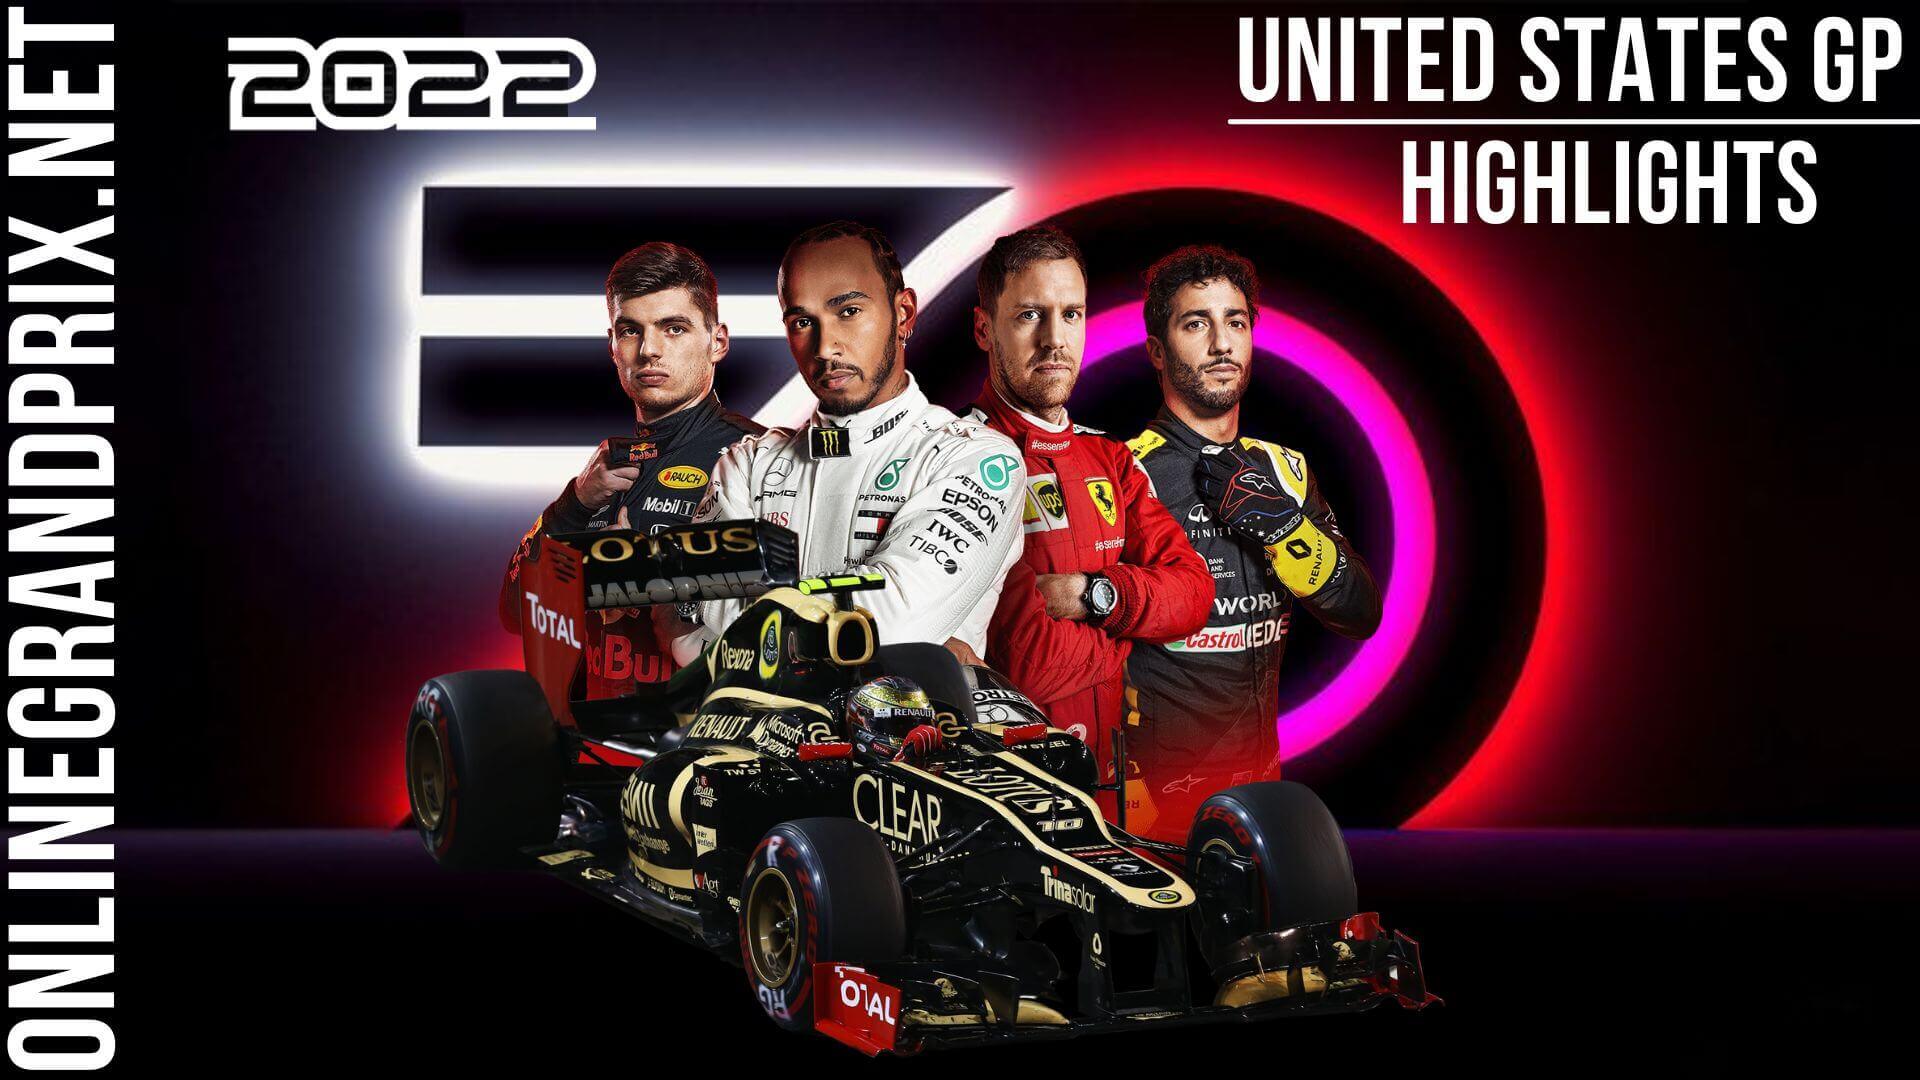 United States GP F1 Highlights 2022